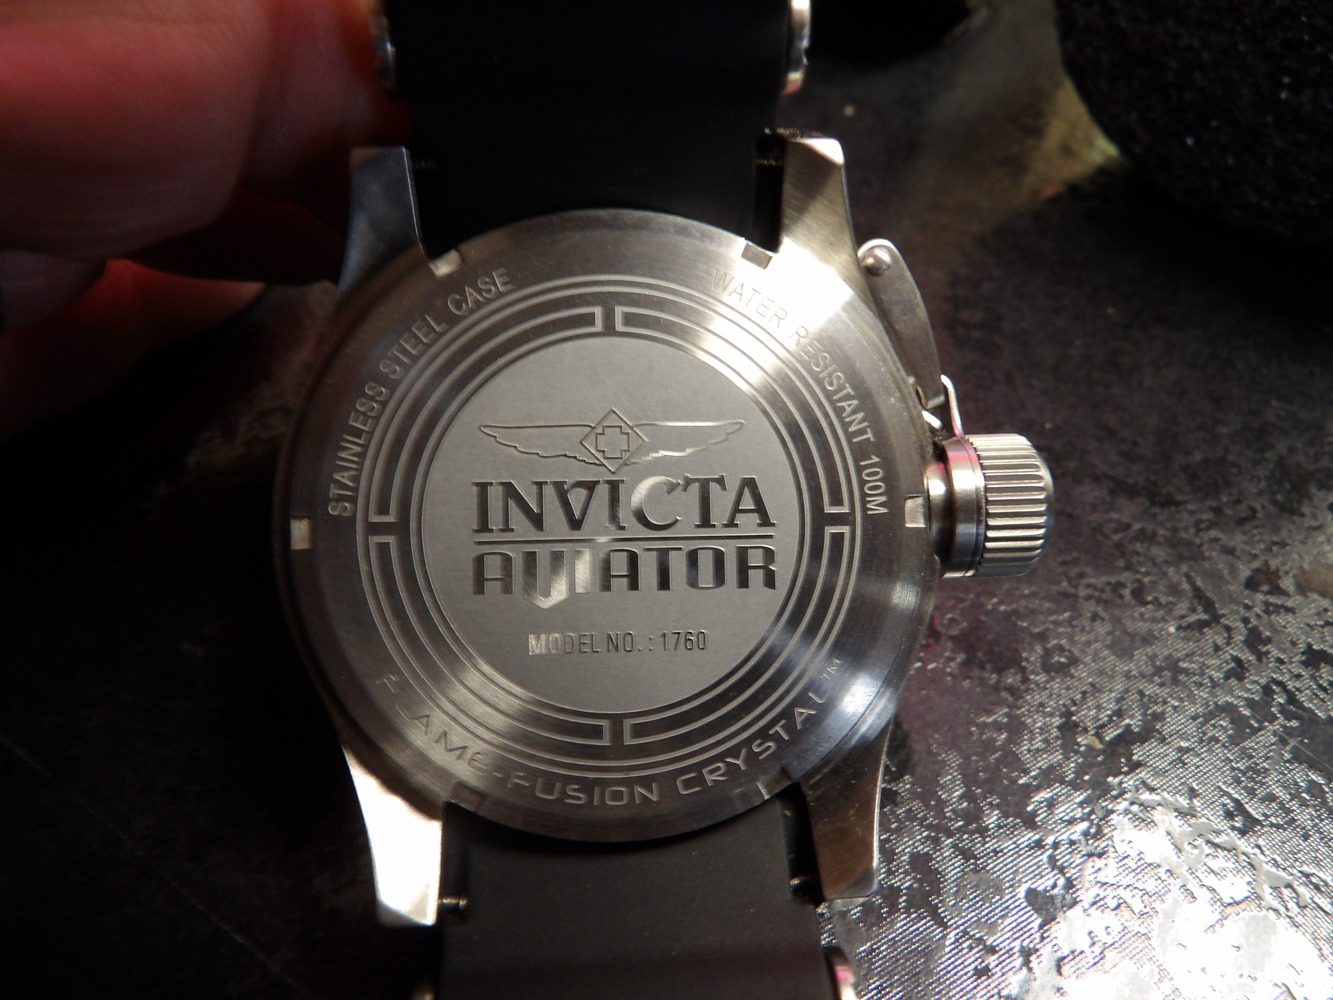 Invicta Aviator Watch Model #1760